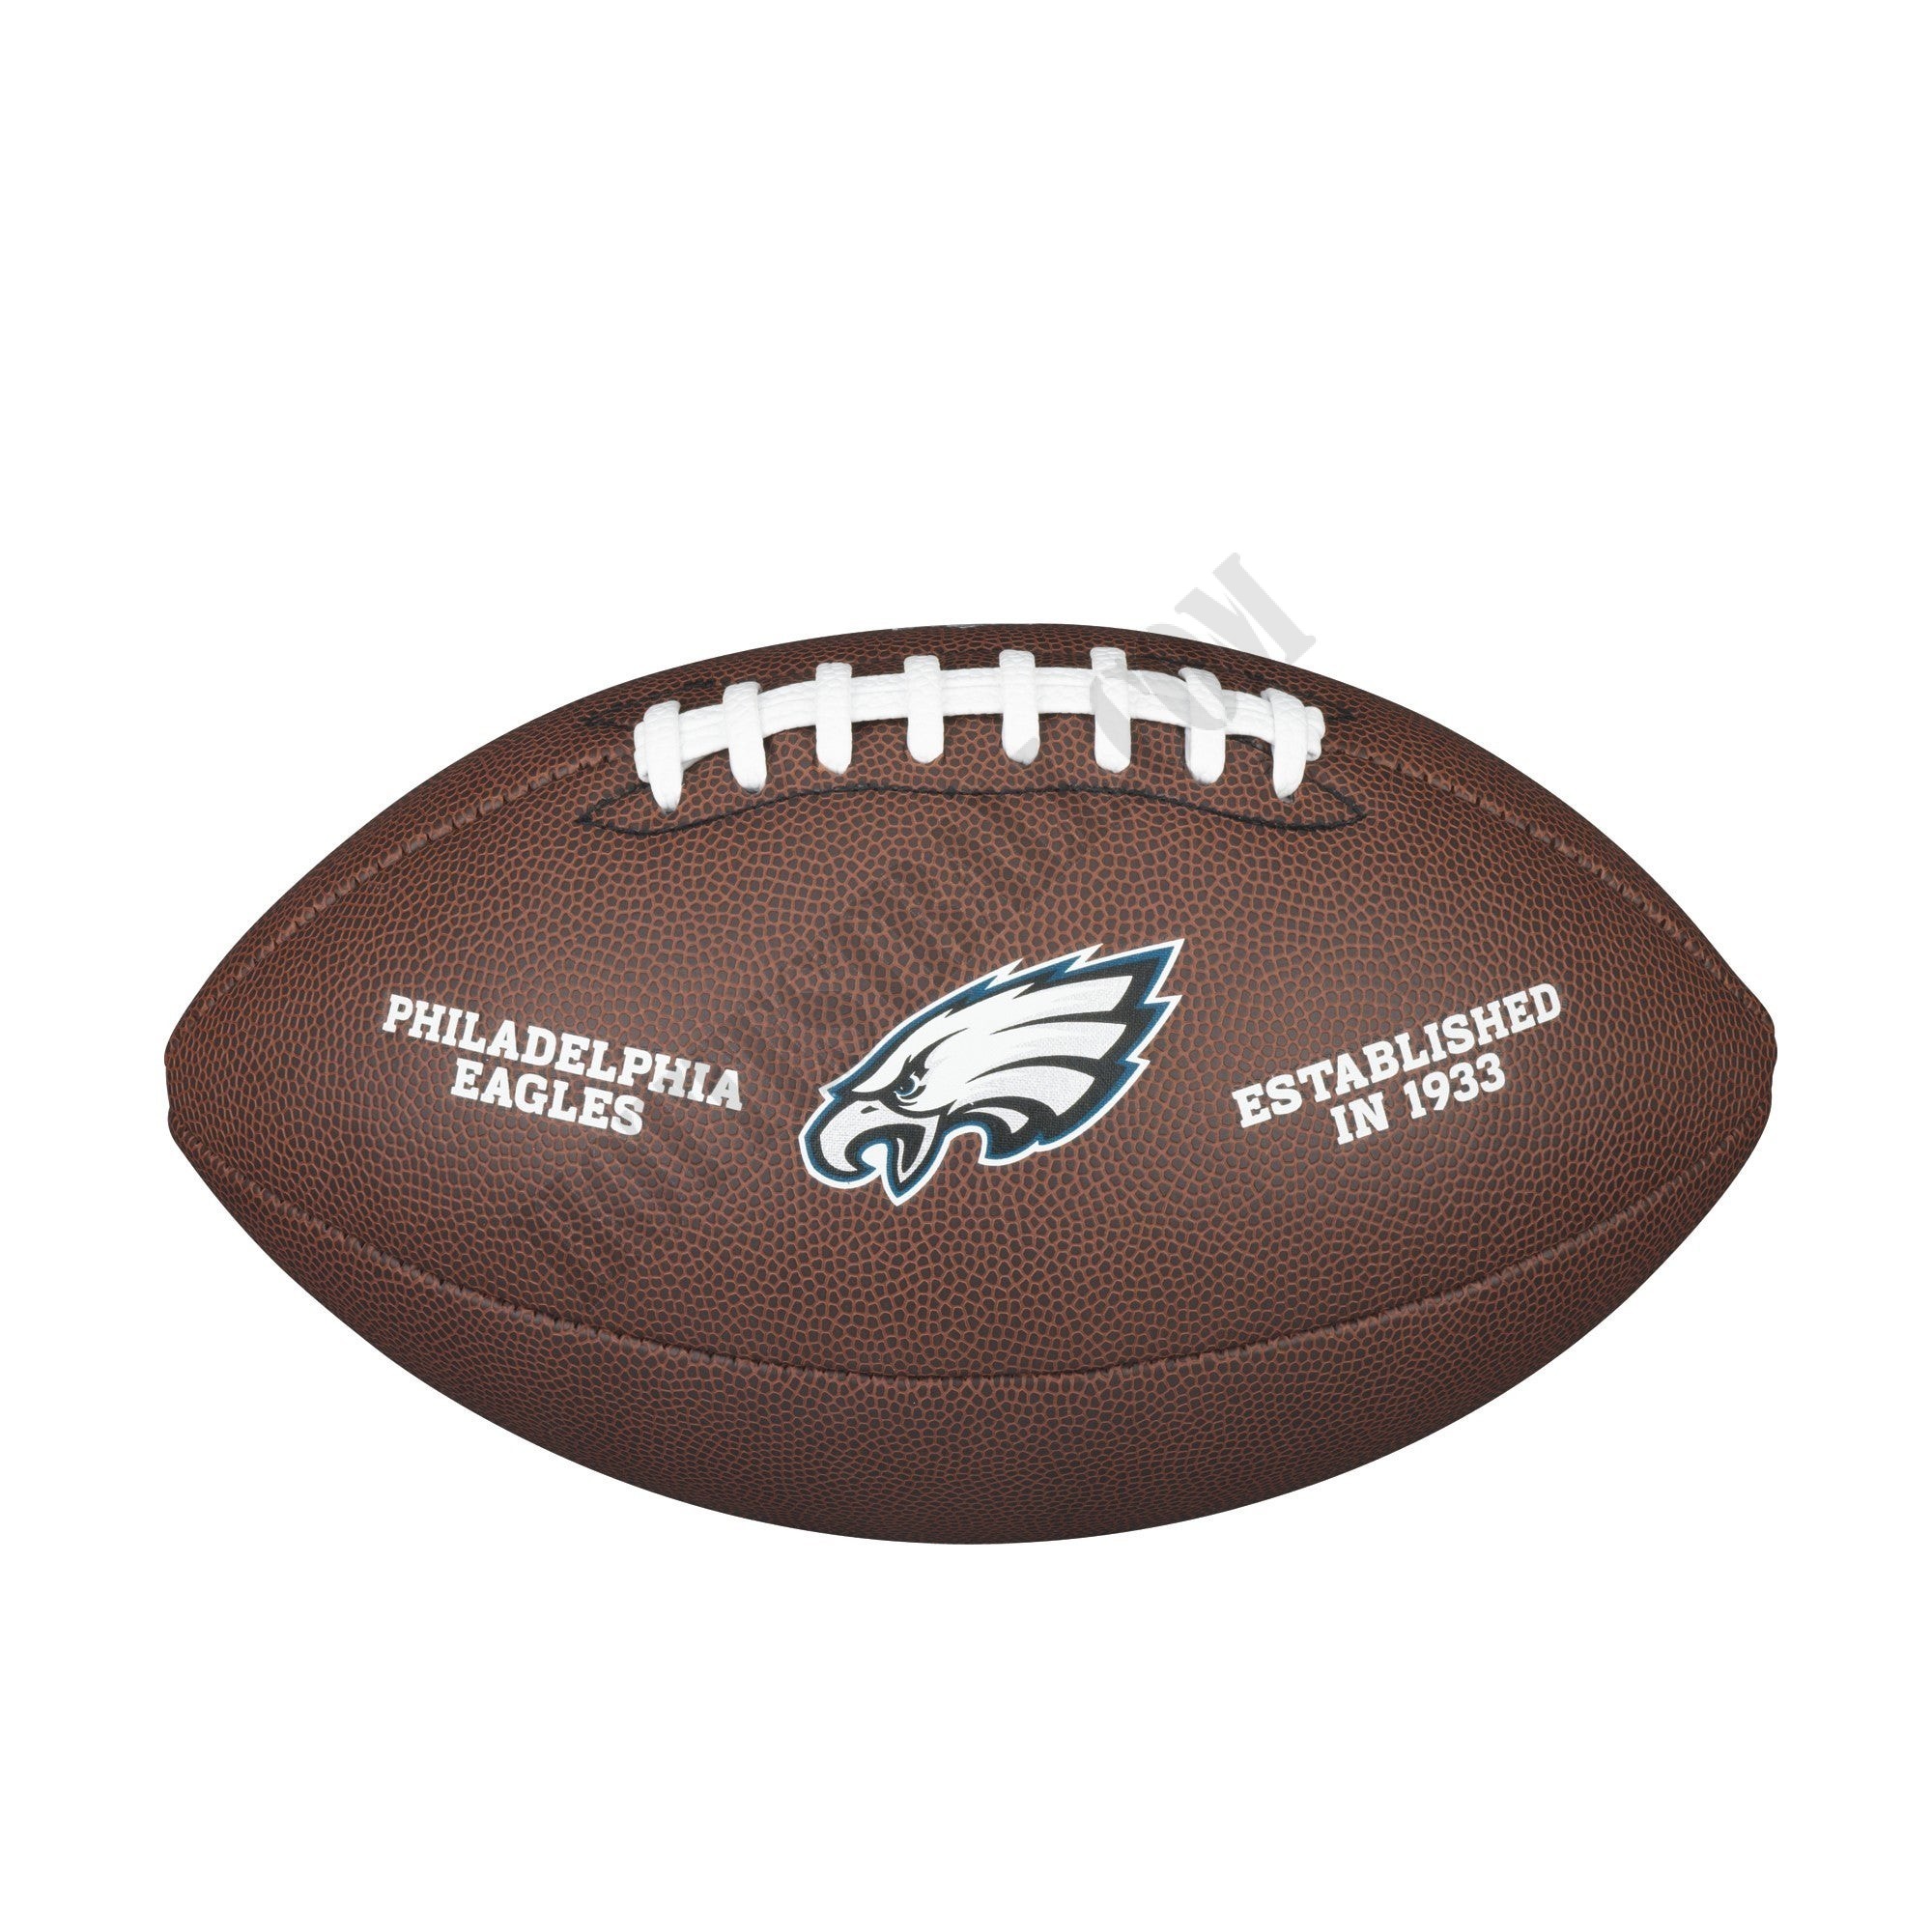 NFL Backyard Legend Football - Philadelphia Eagles ● Wilson Promotions - NFL Backyard Legend Football - Philadelphia Eagles ● Wilson Promotions